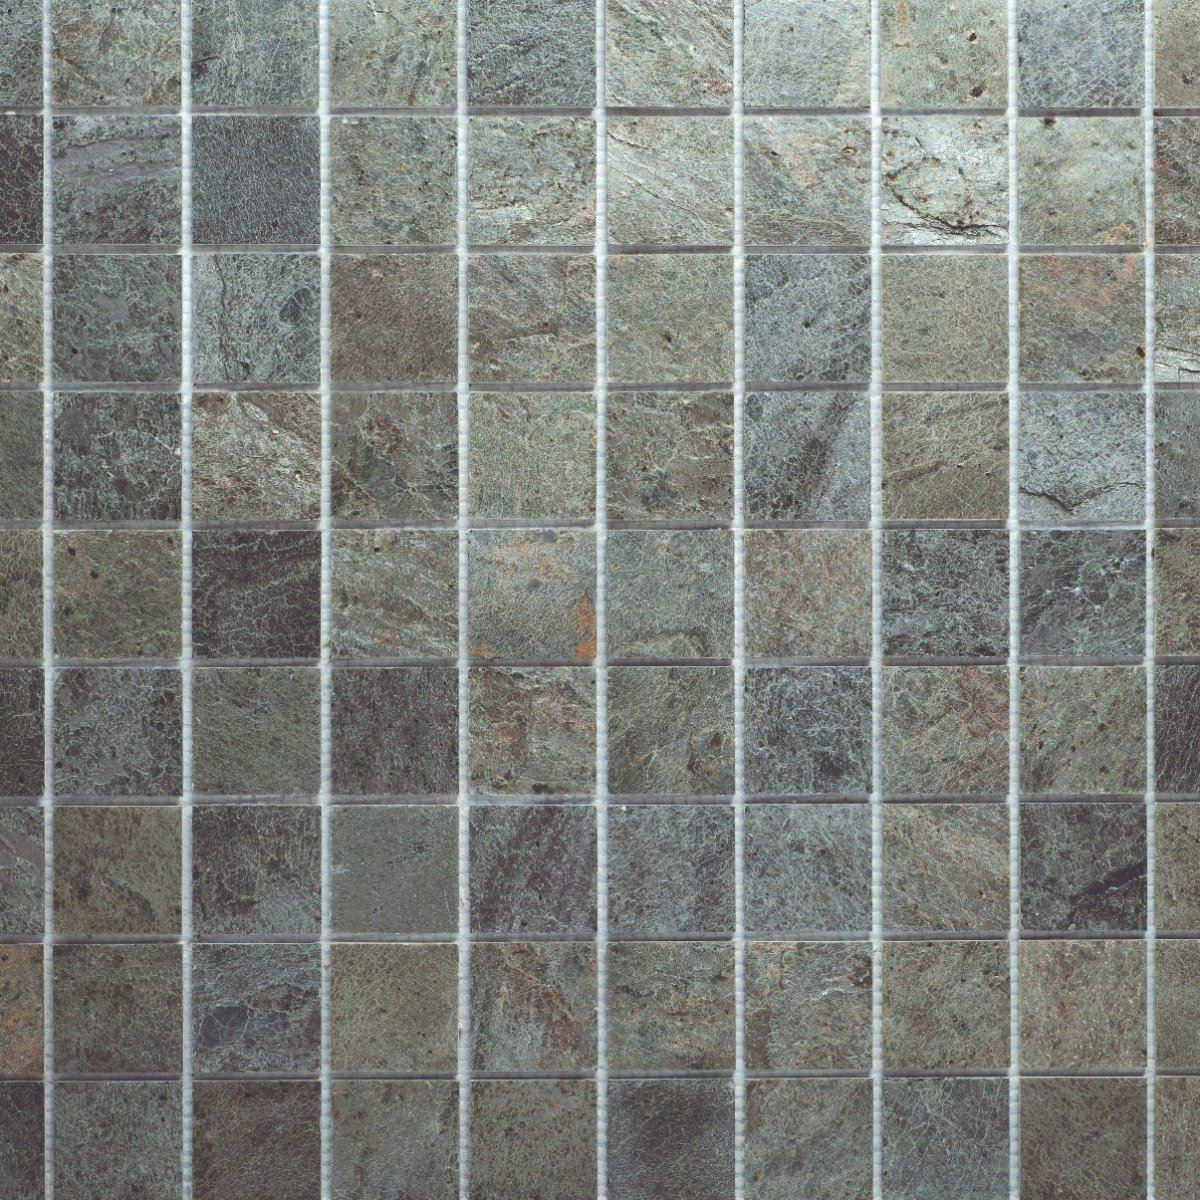 Slicedstone Bronze Mosaic Bathroom Tile (50x50mm squares) 1000 x 500mm